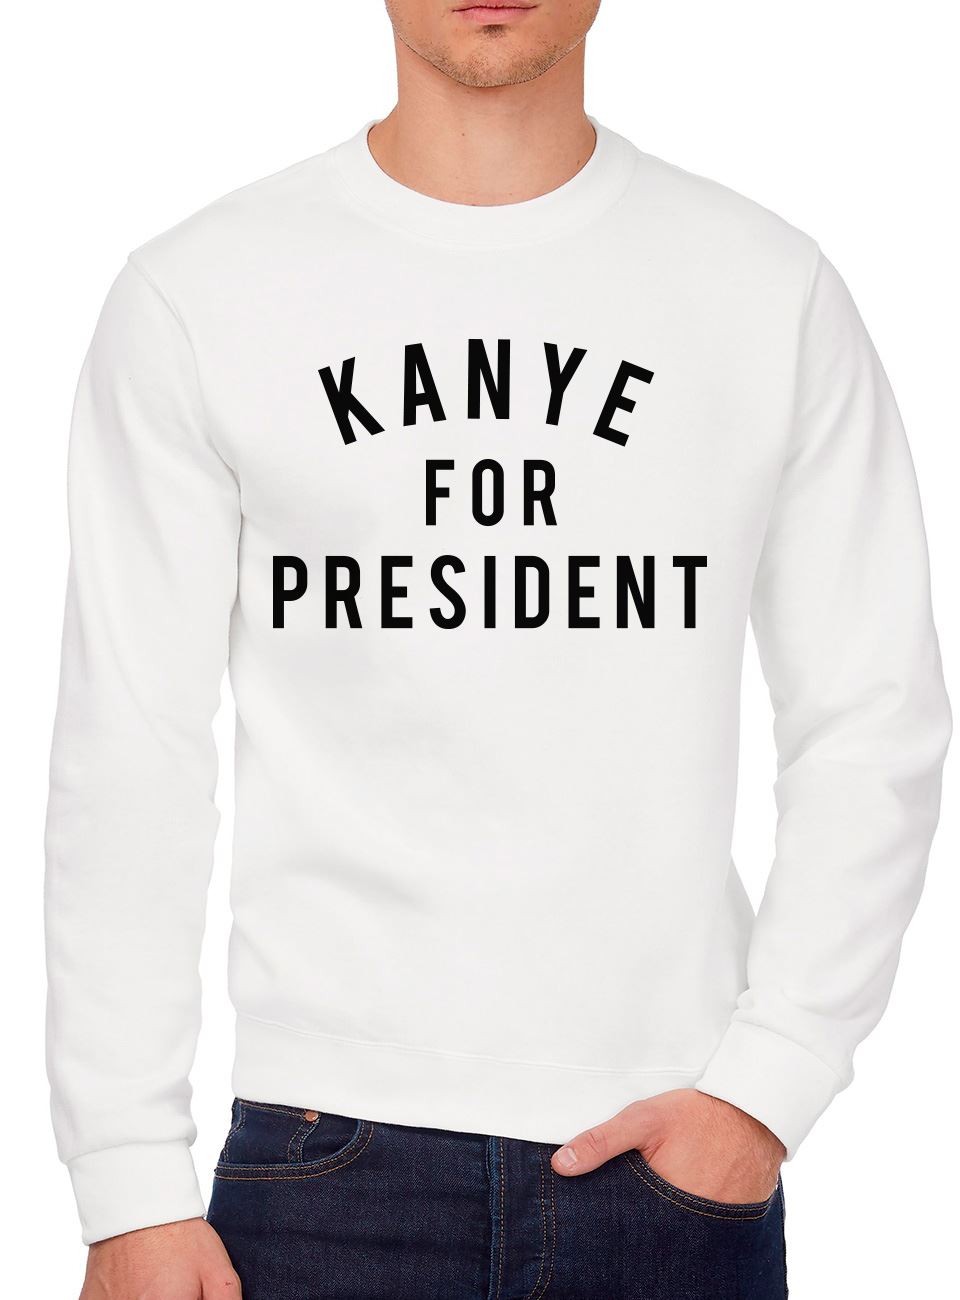 Kanye for President - Youth & Mens Sweatshirt